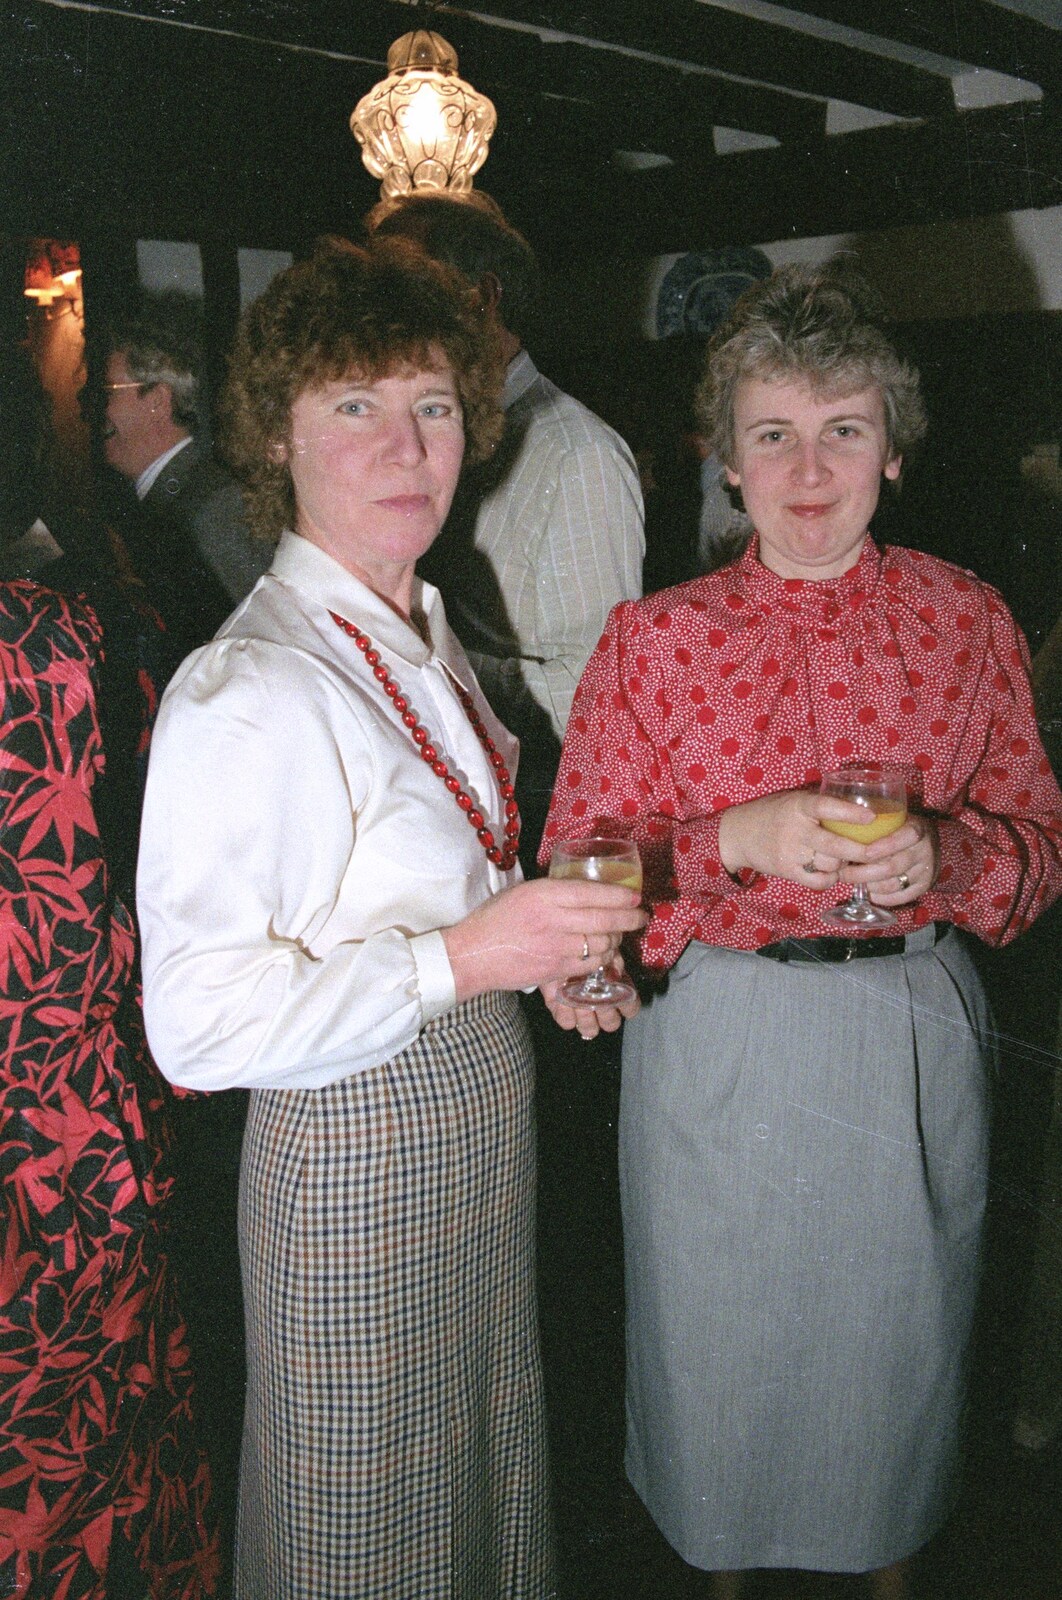 Brenda and Linda from Pancake Day in Starston, Norfolk - 27th February 1990